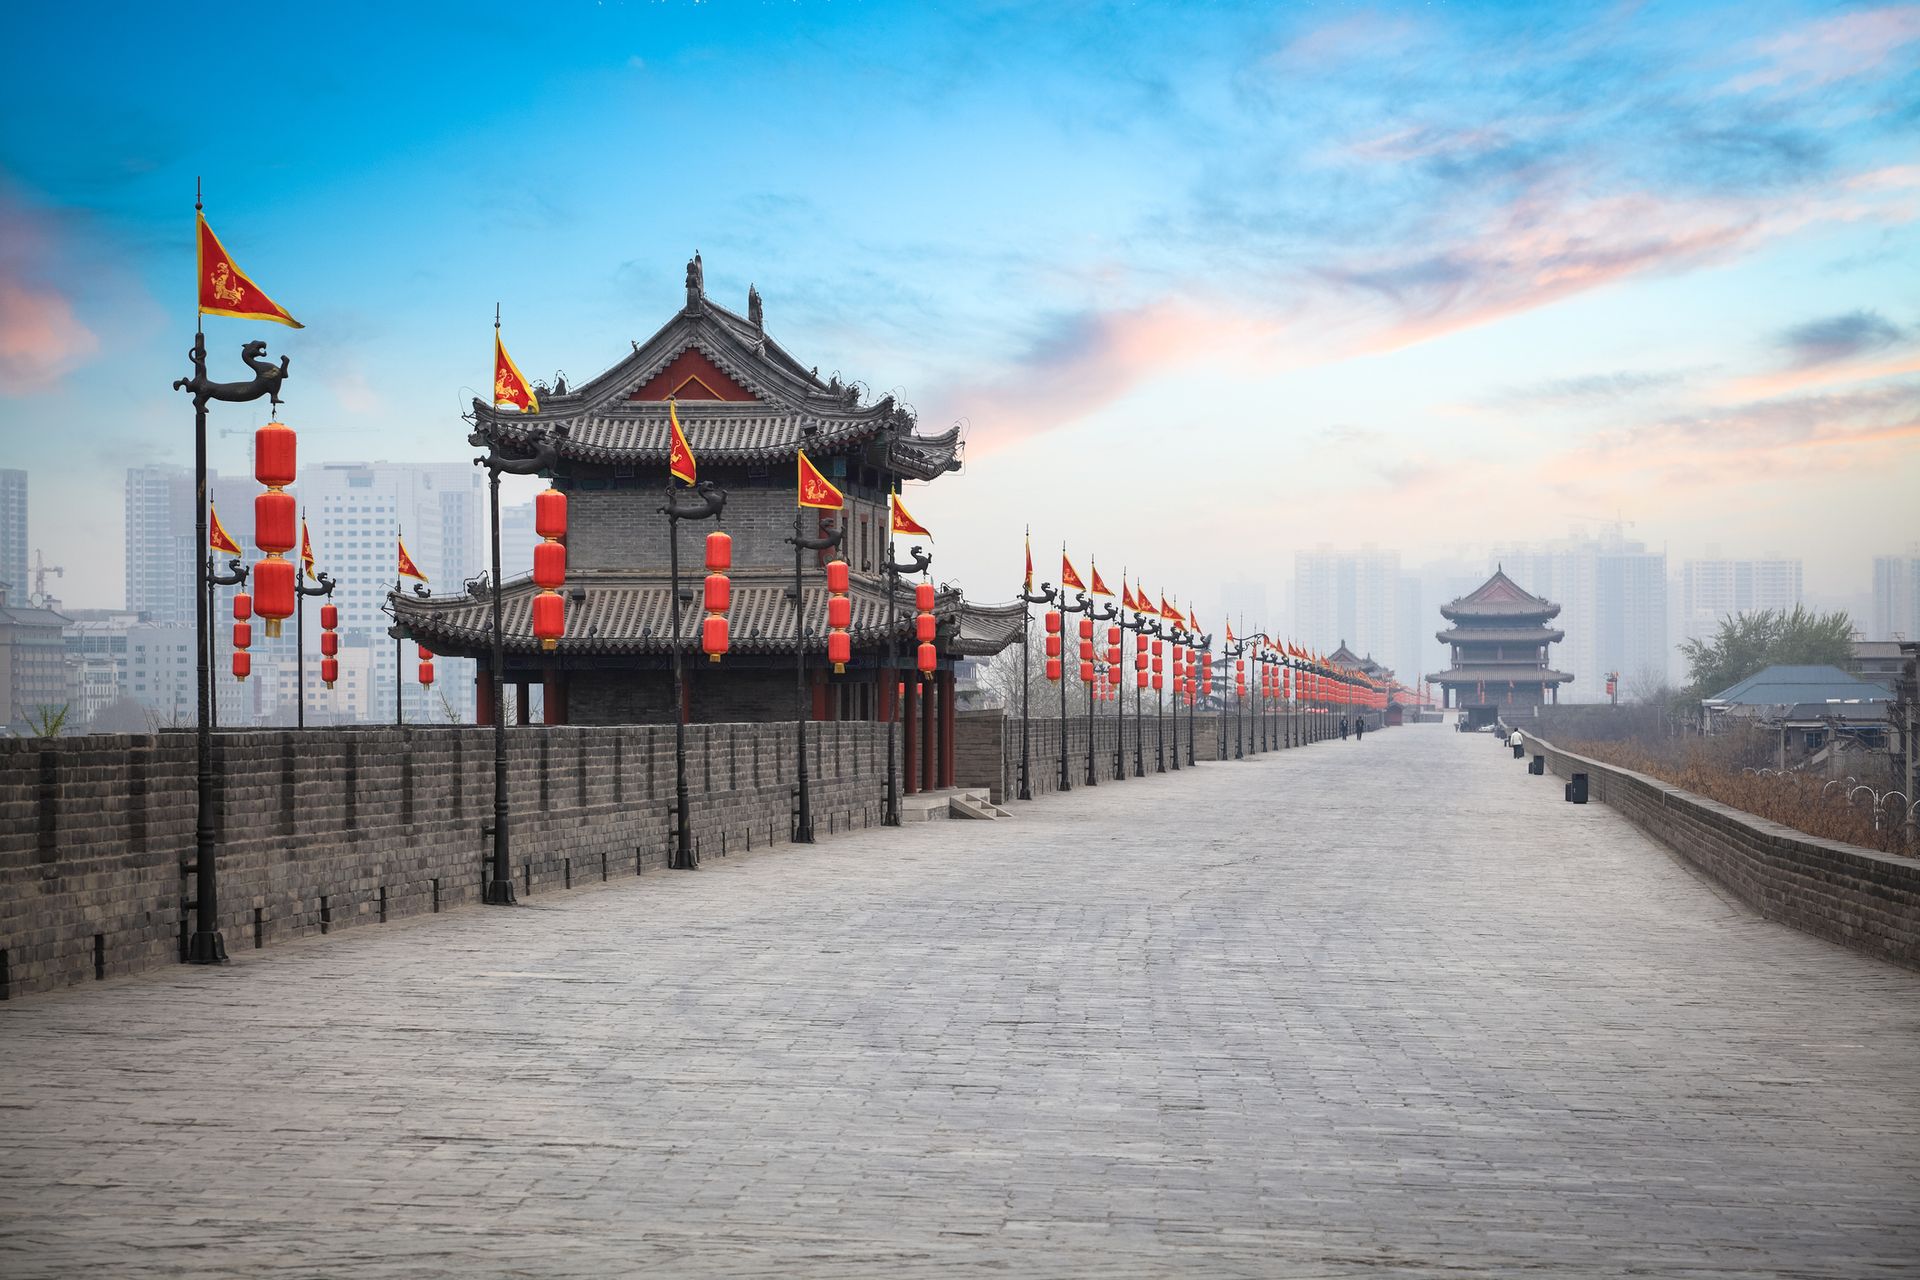 Ancienne muraille de la ville, XiAn - Chine ©iStock